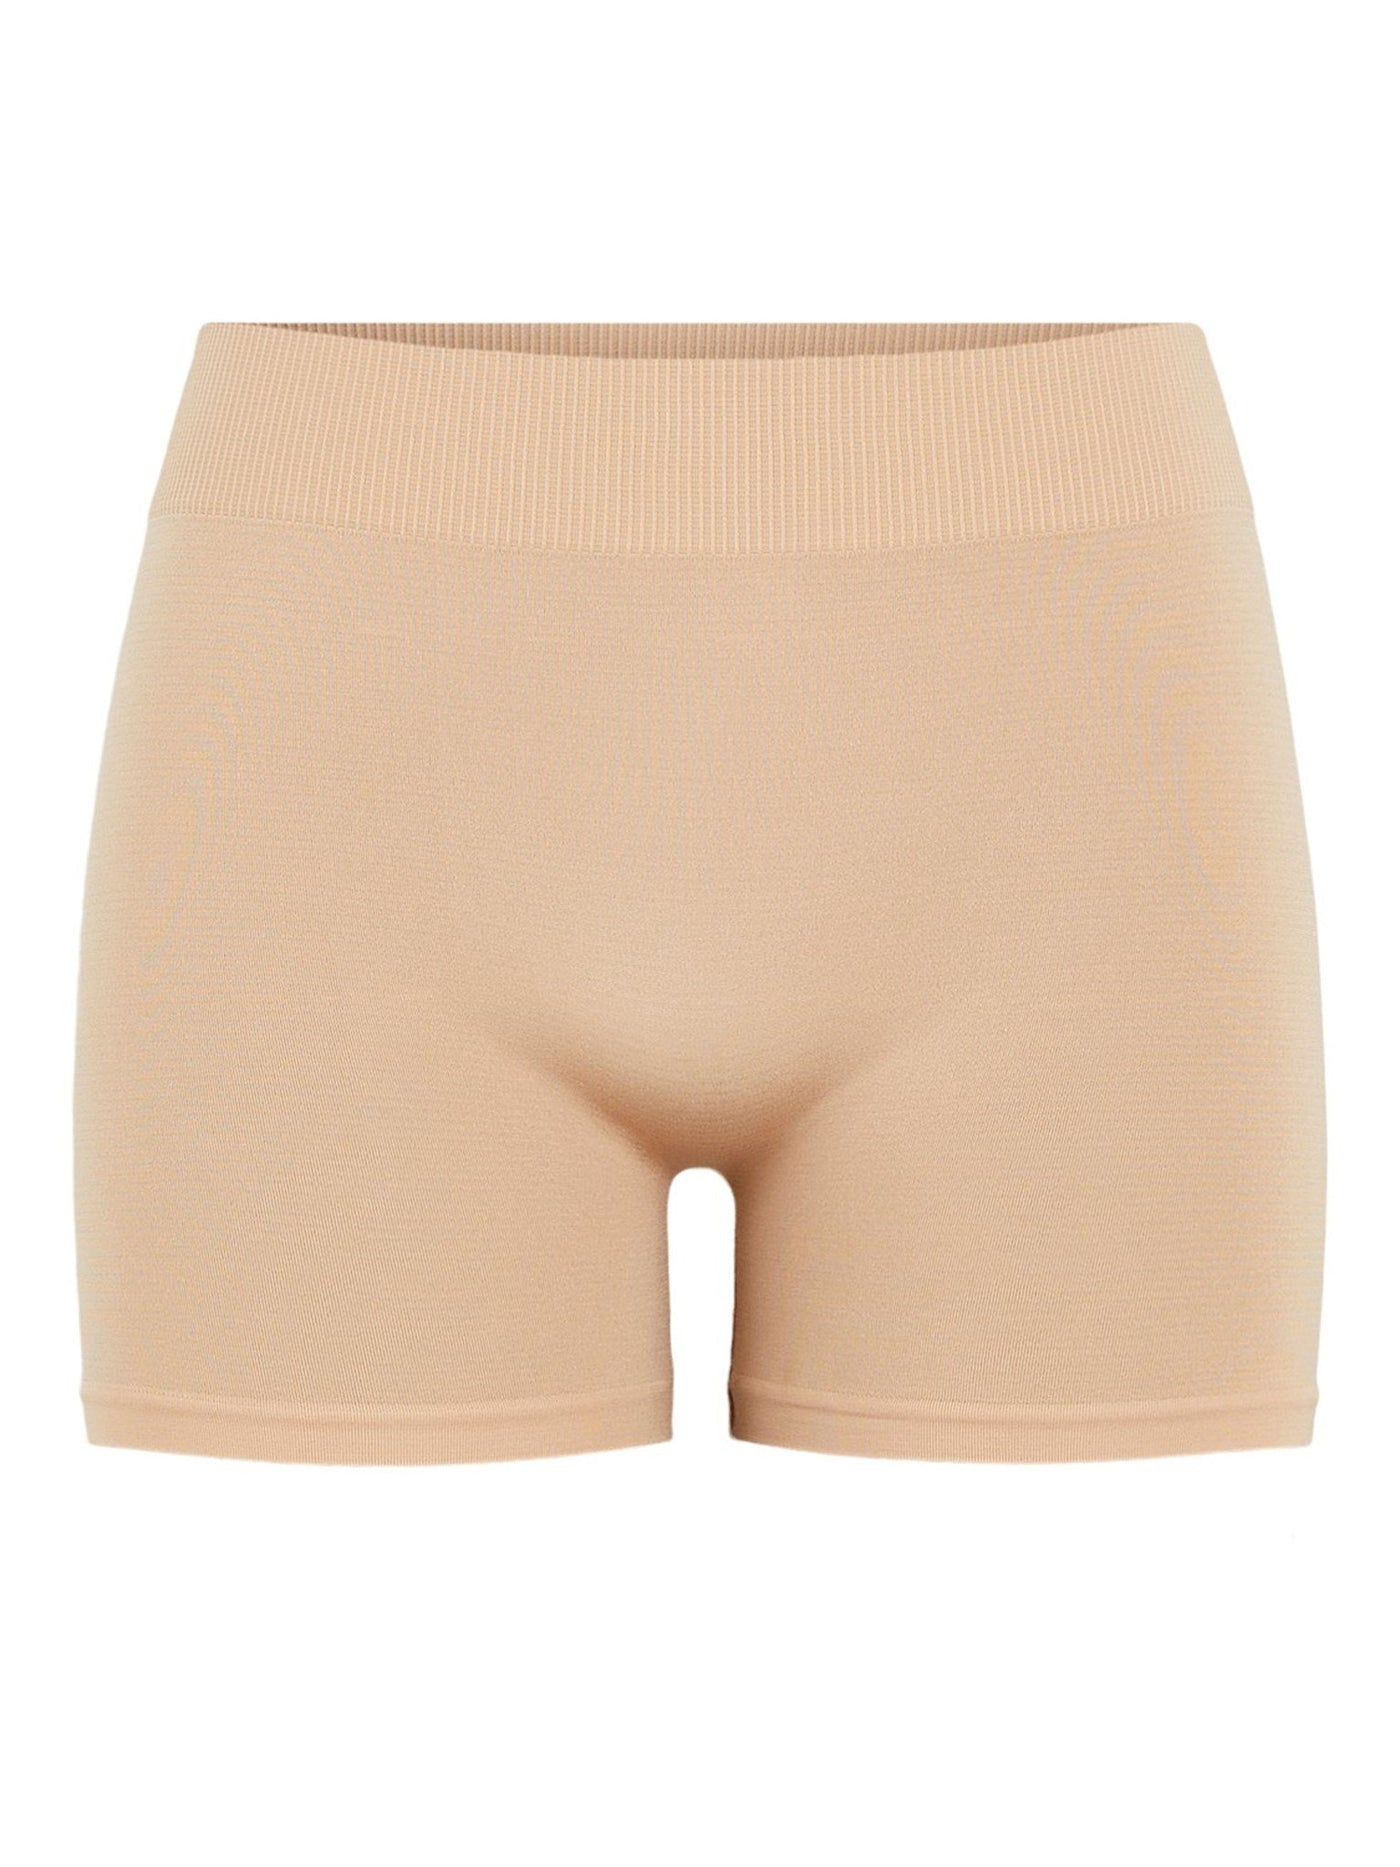 London mini shorts - Natura - PIECES - Brun